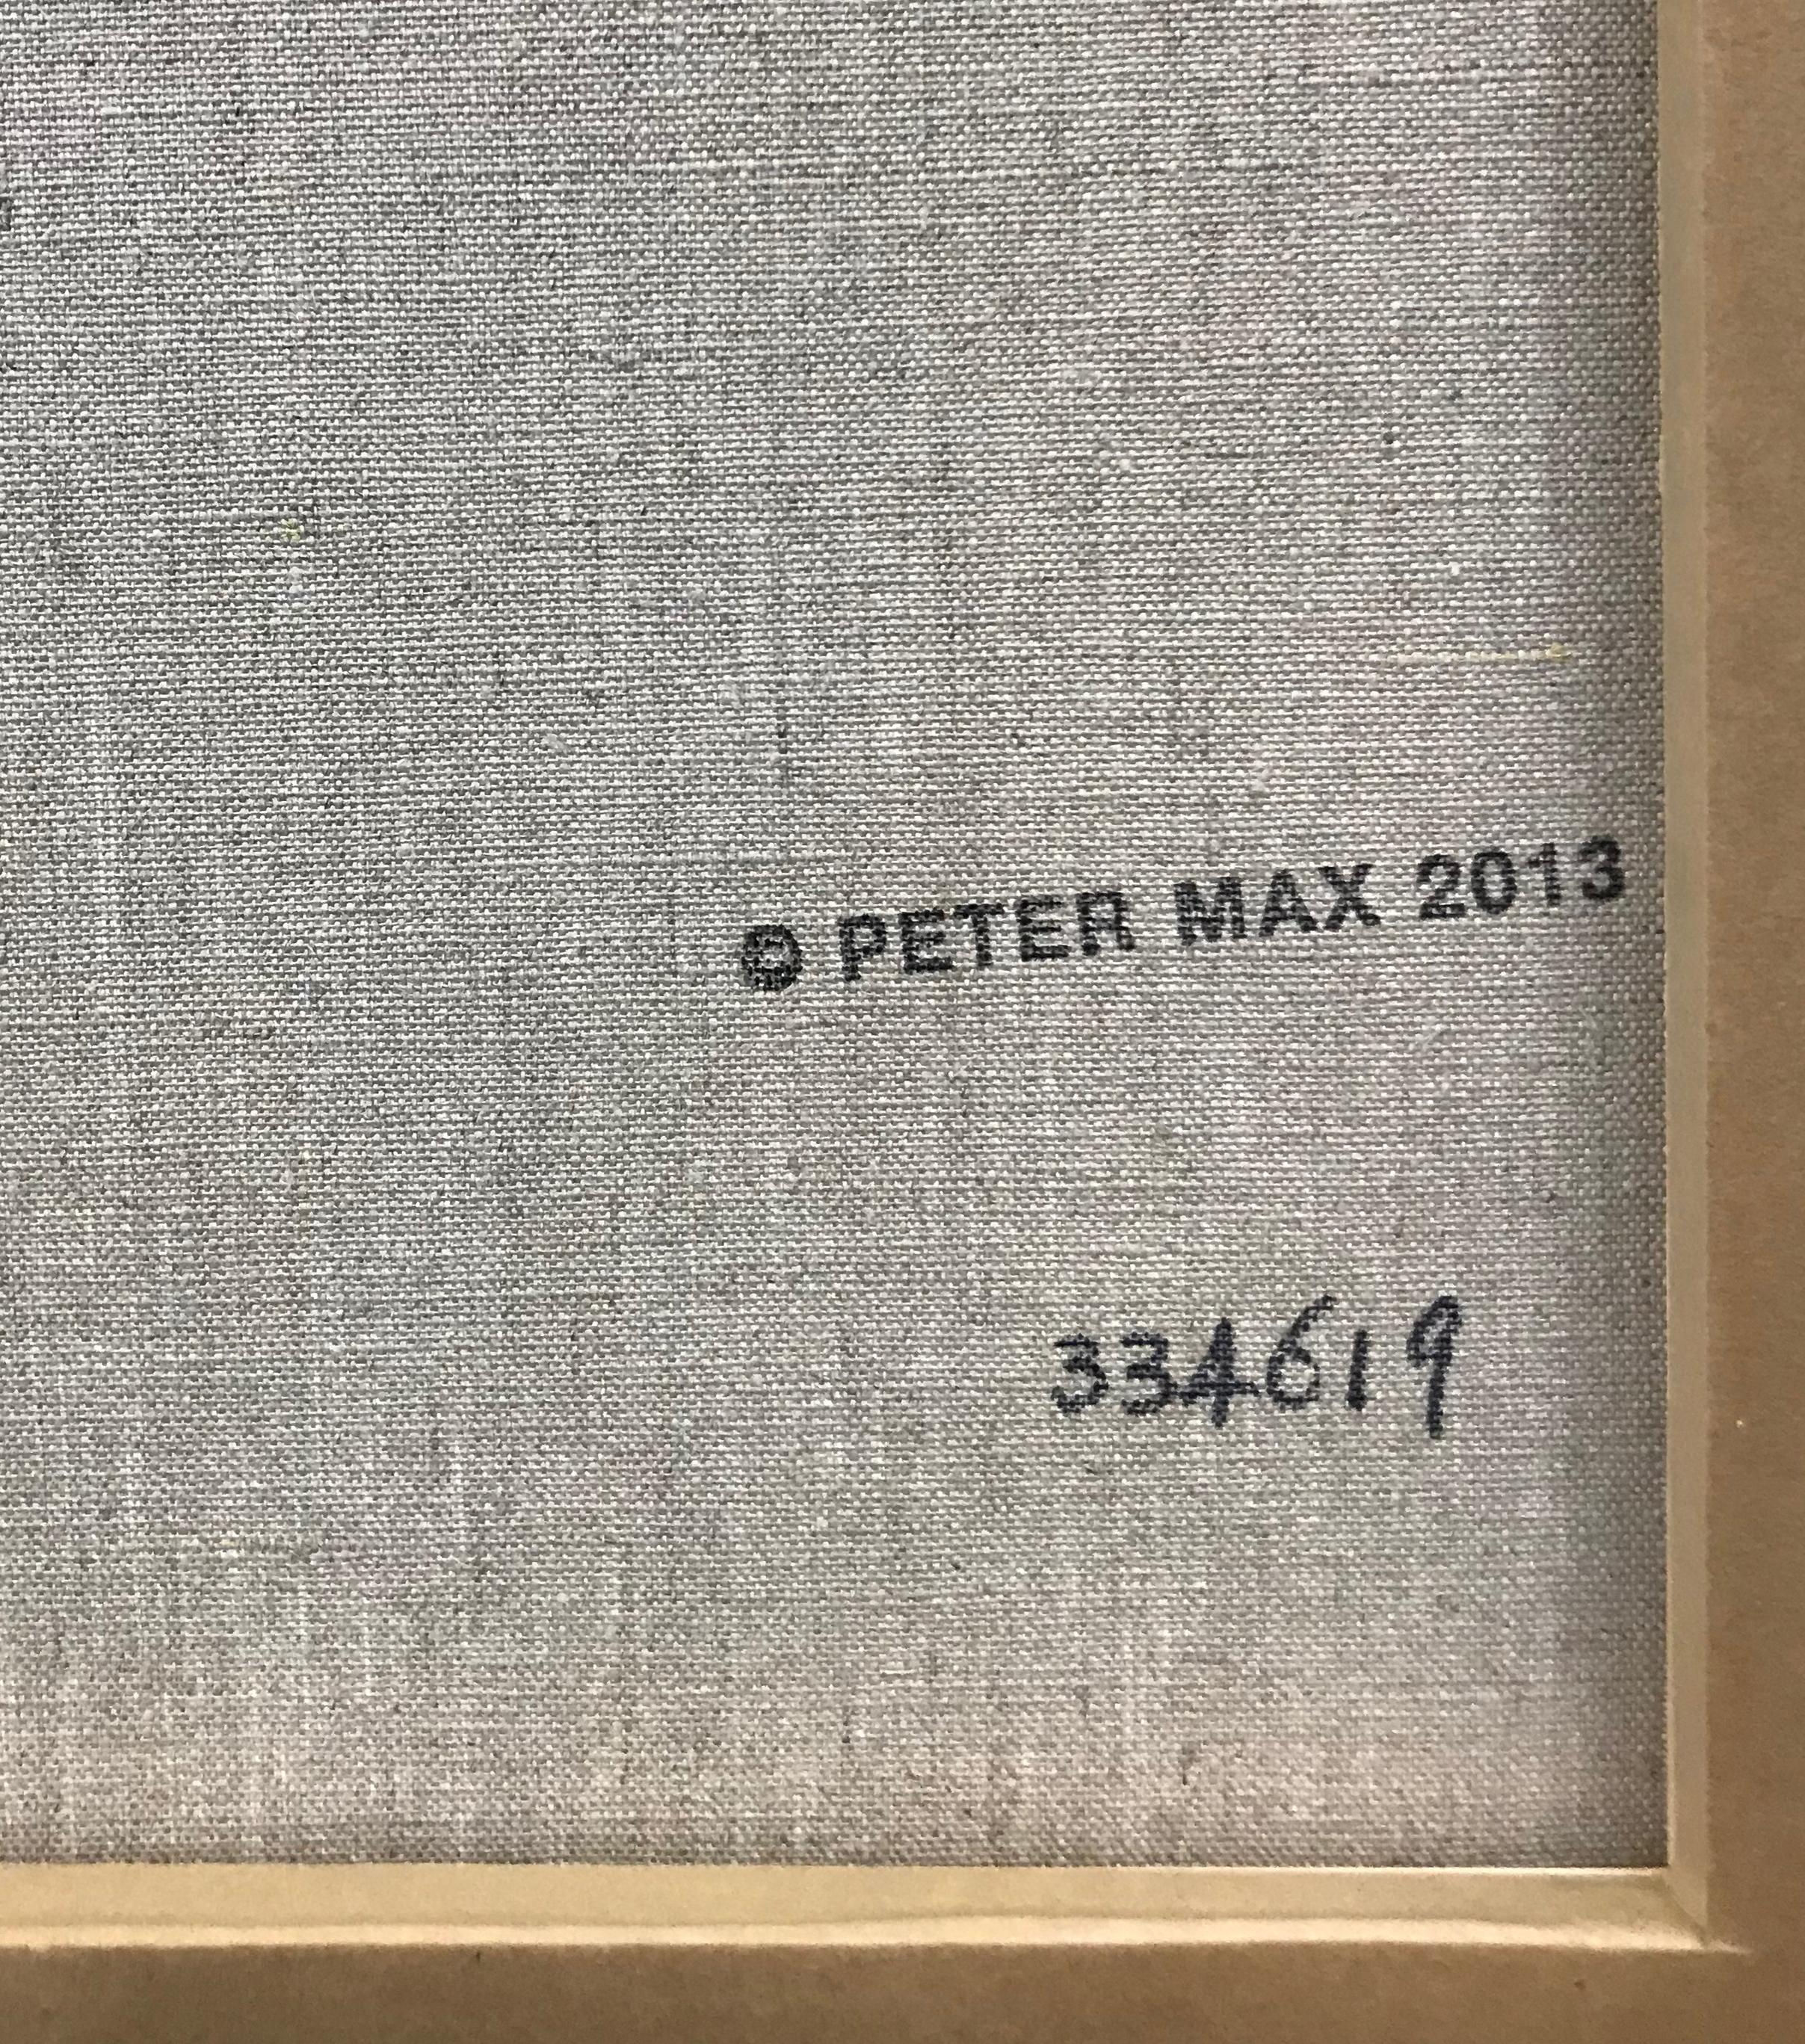 peter max art prices